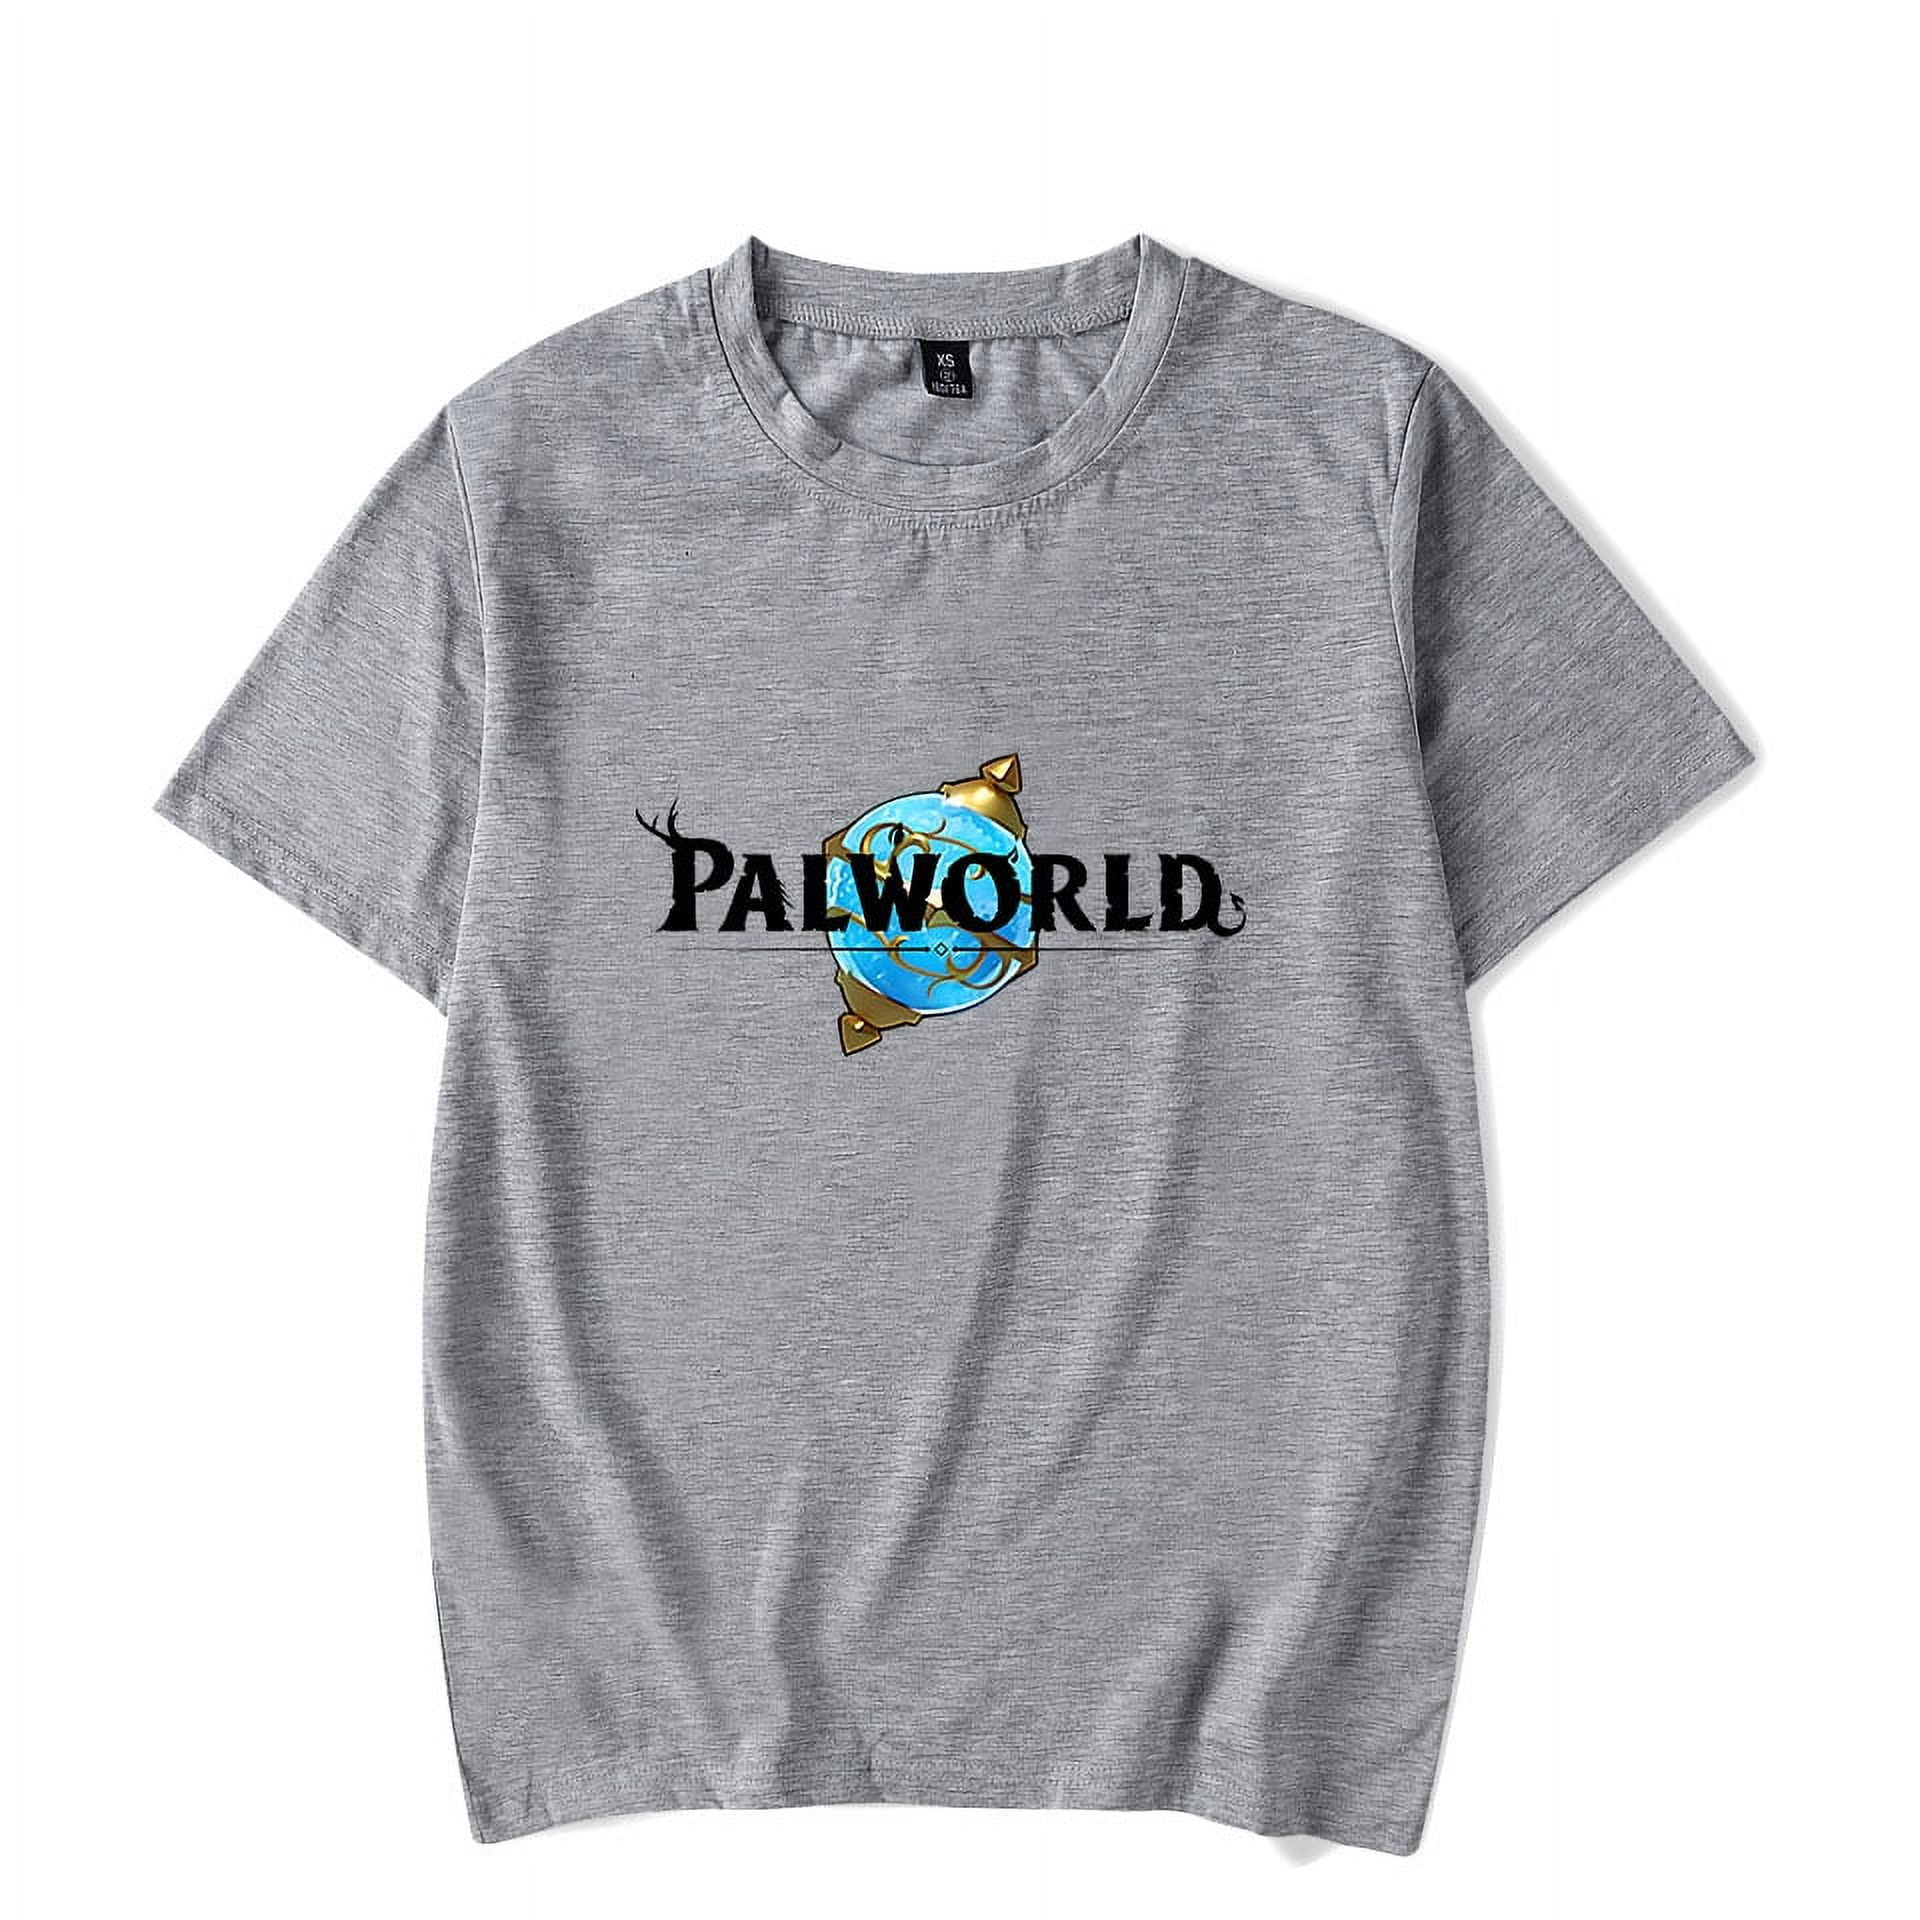 Palworld Tshirt Merch Summer For Women/Men Unisex Fashion Cosplay